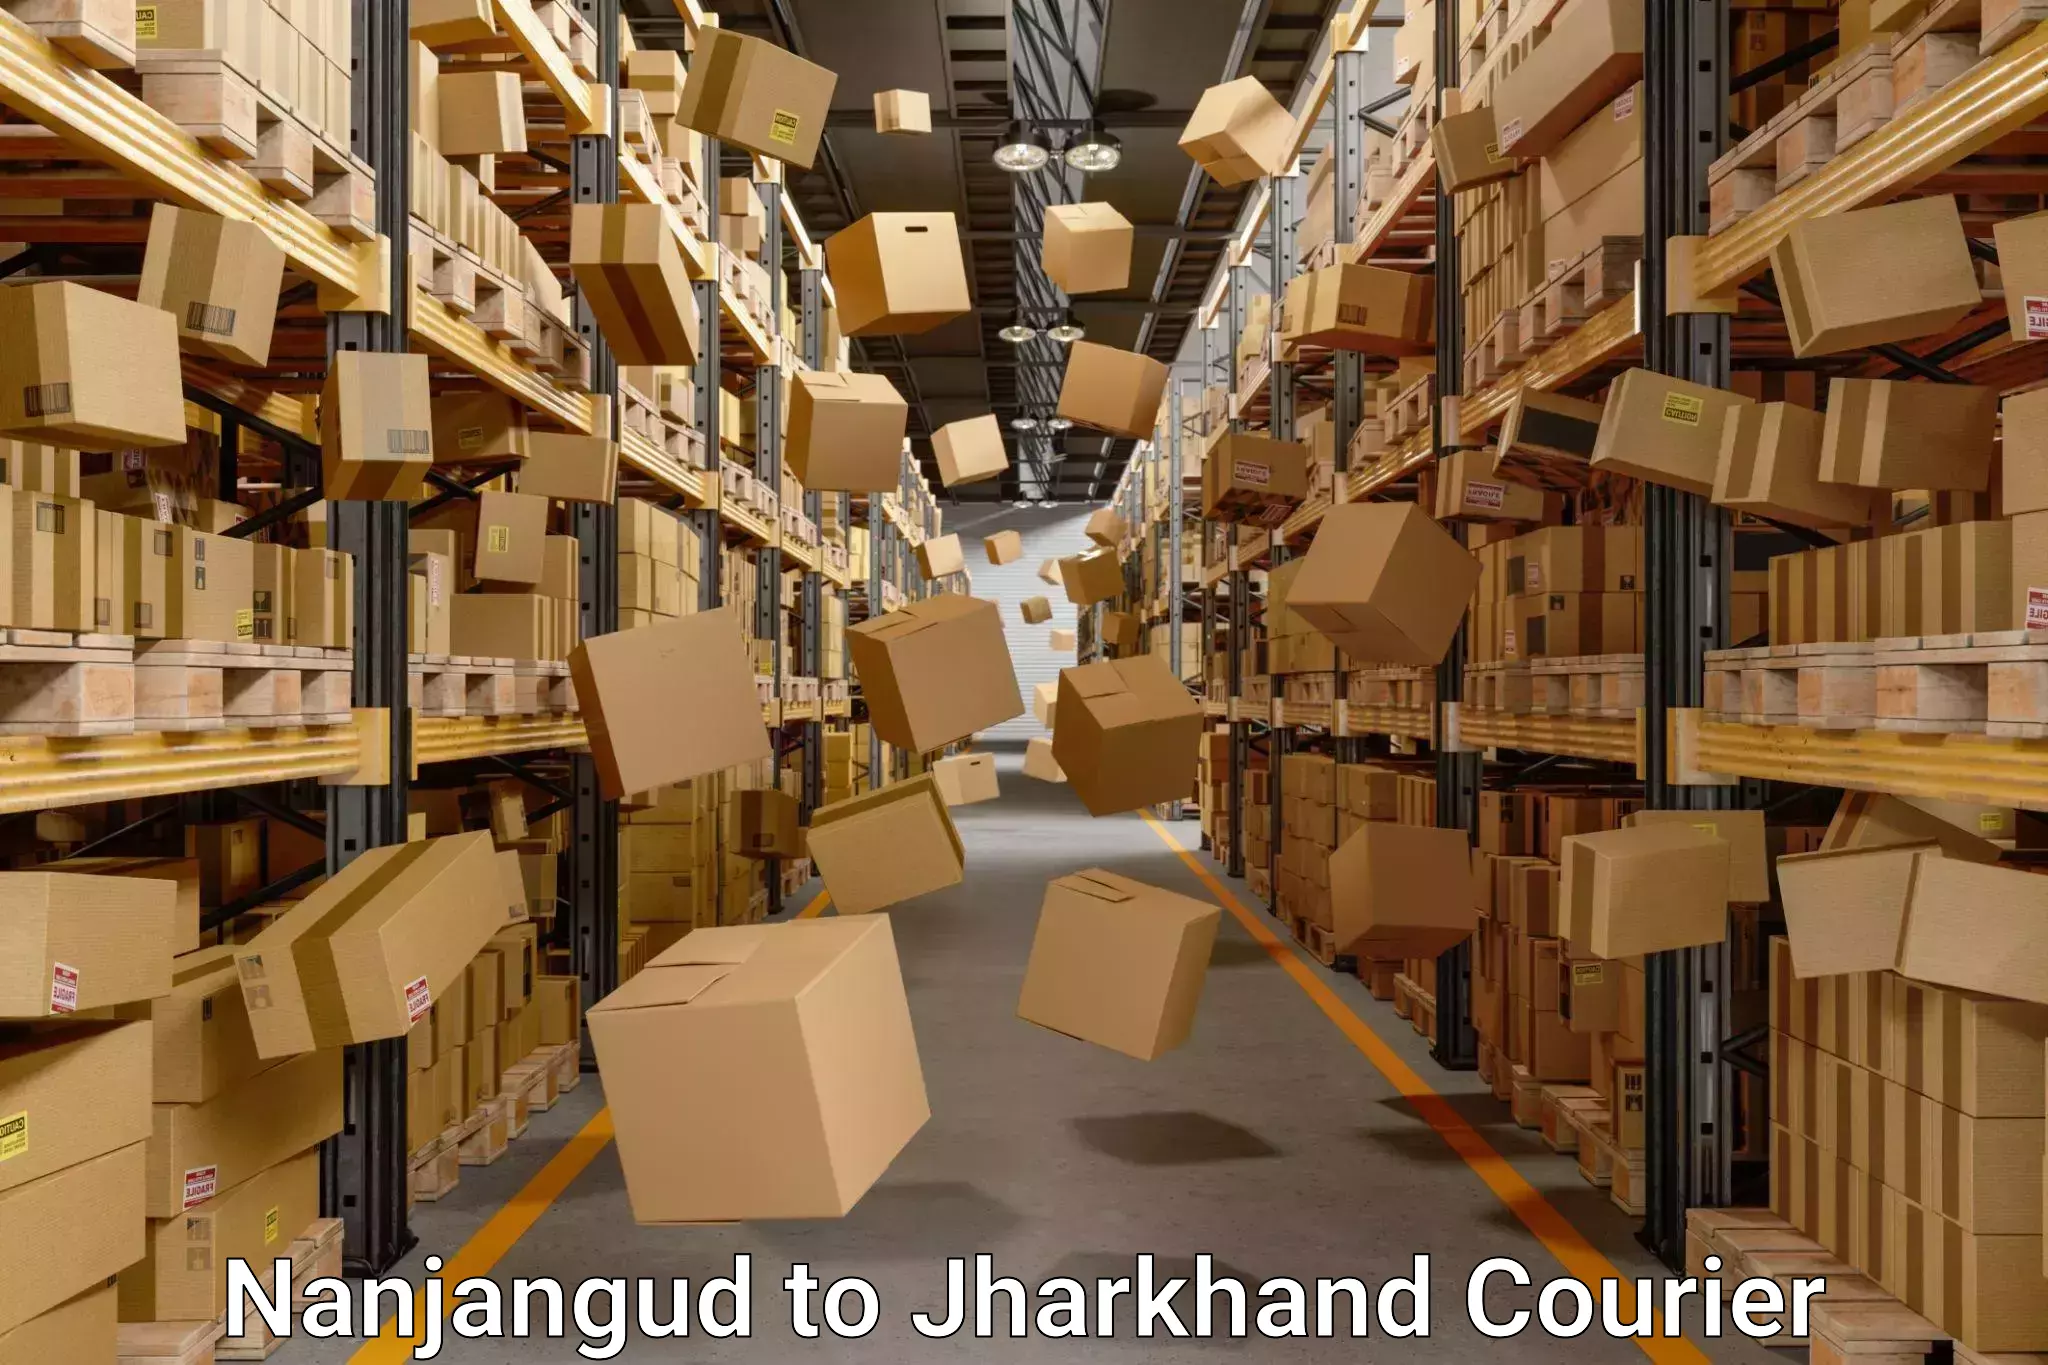 Trusted moving company Nanjangud to Ranchi